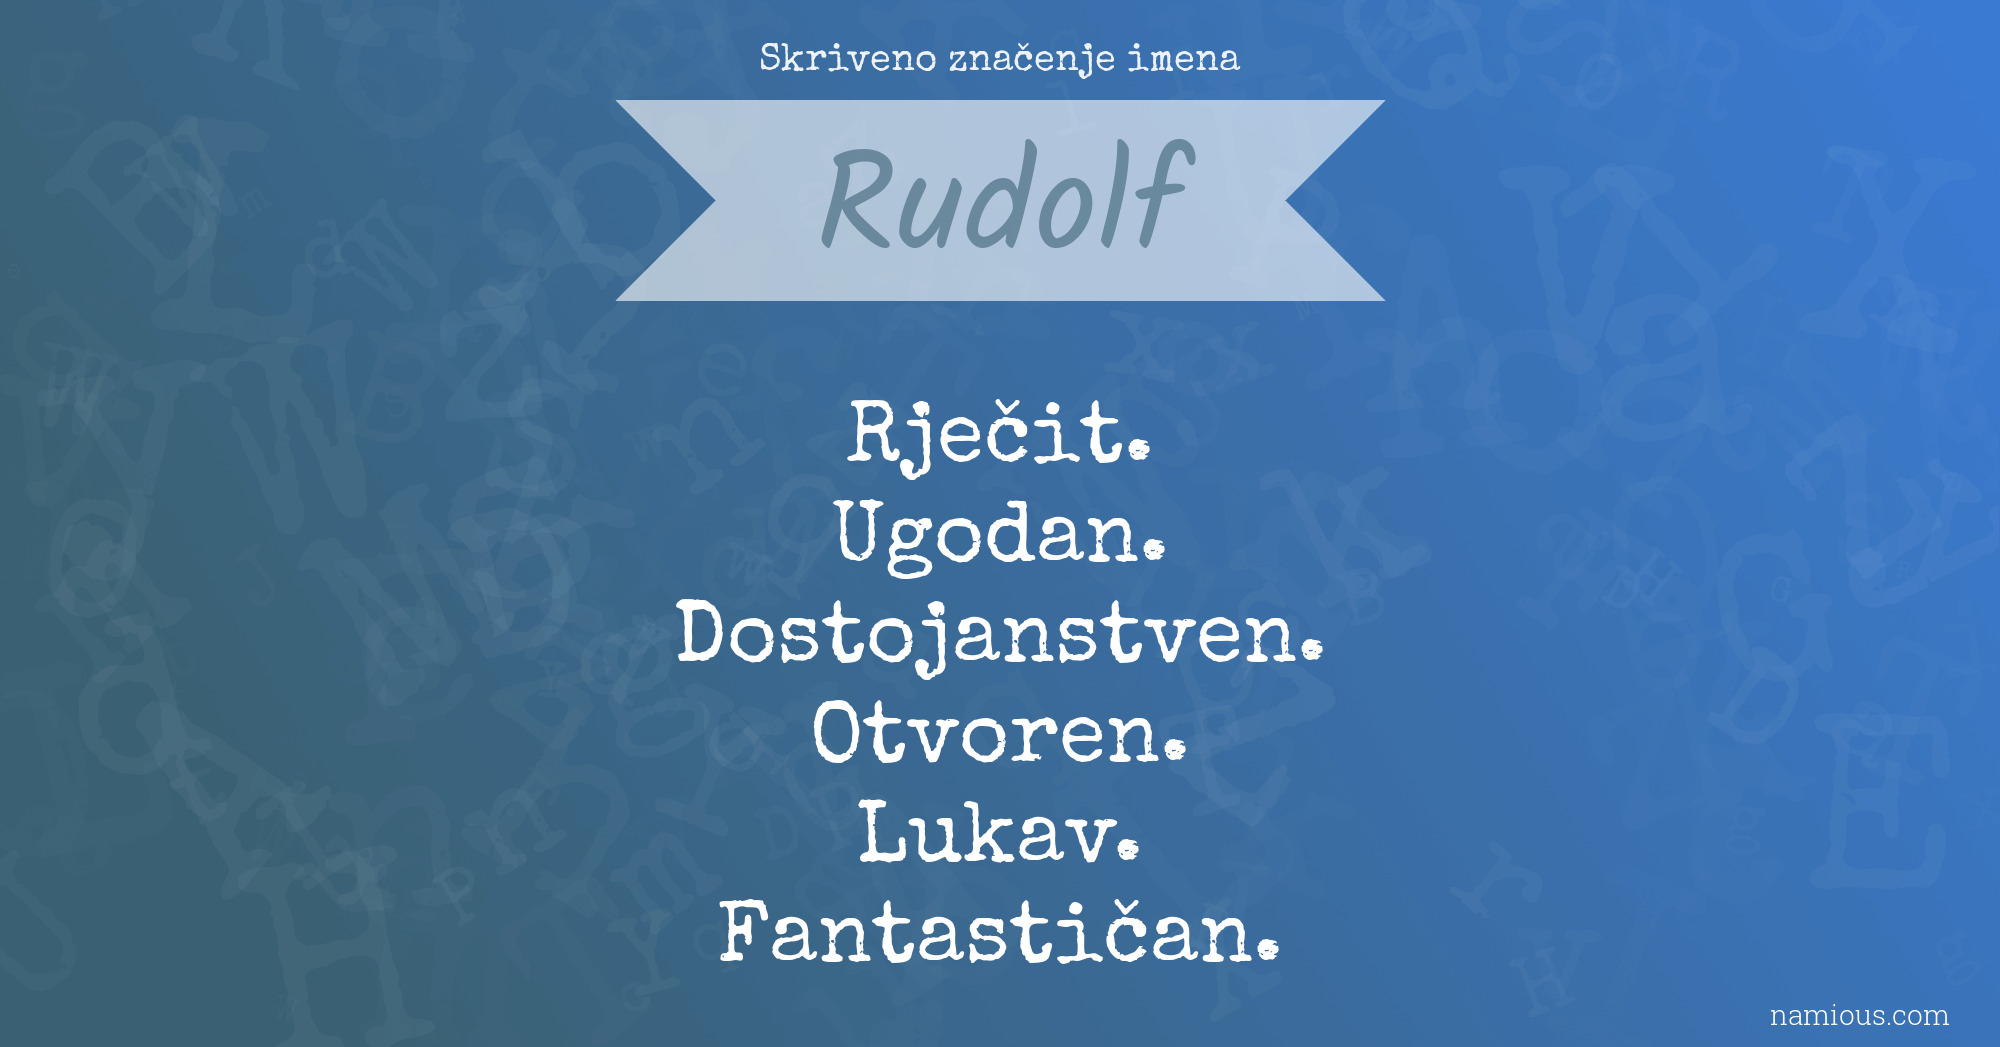 Skriveno značenje imena Rudolf